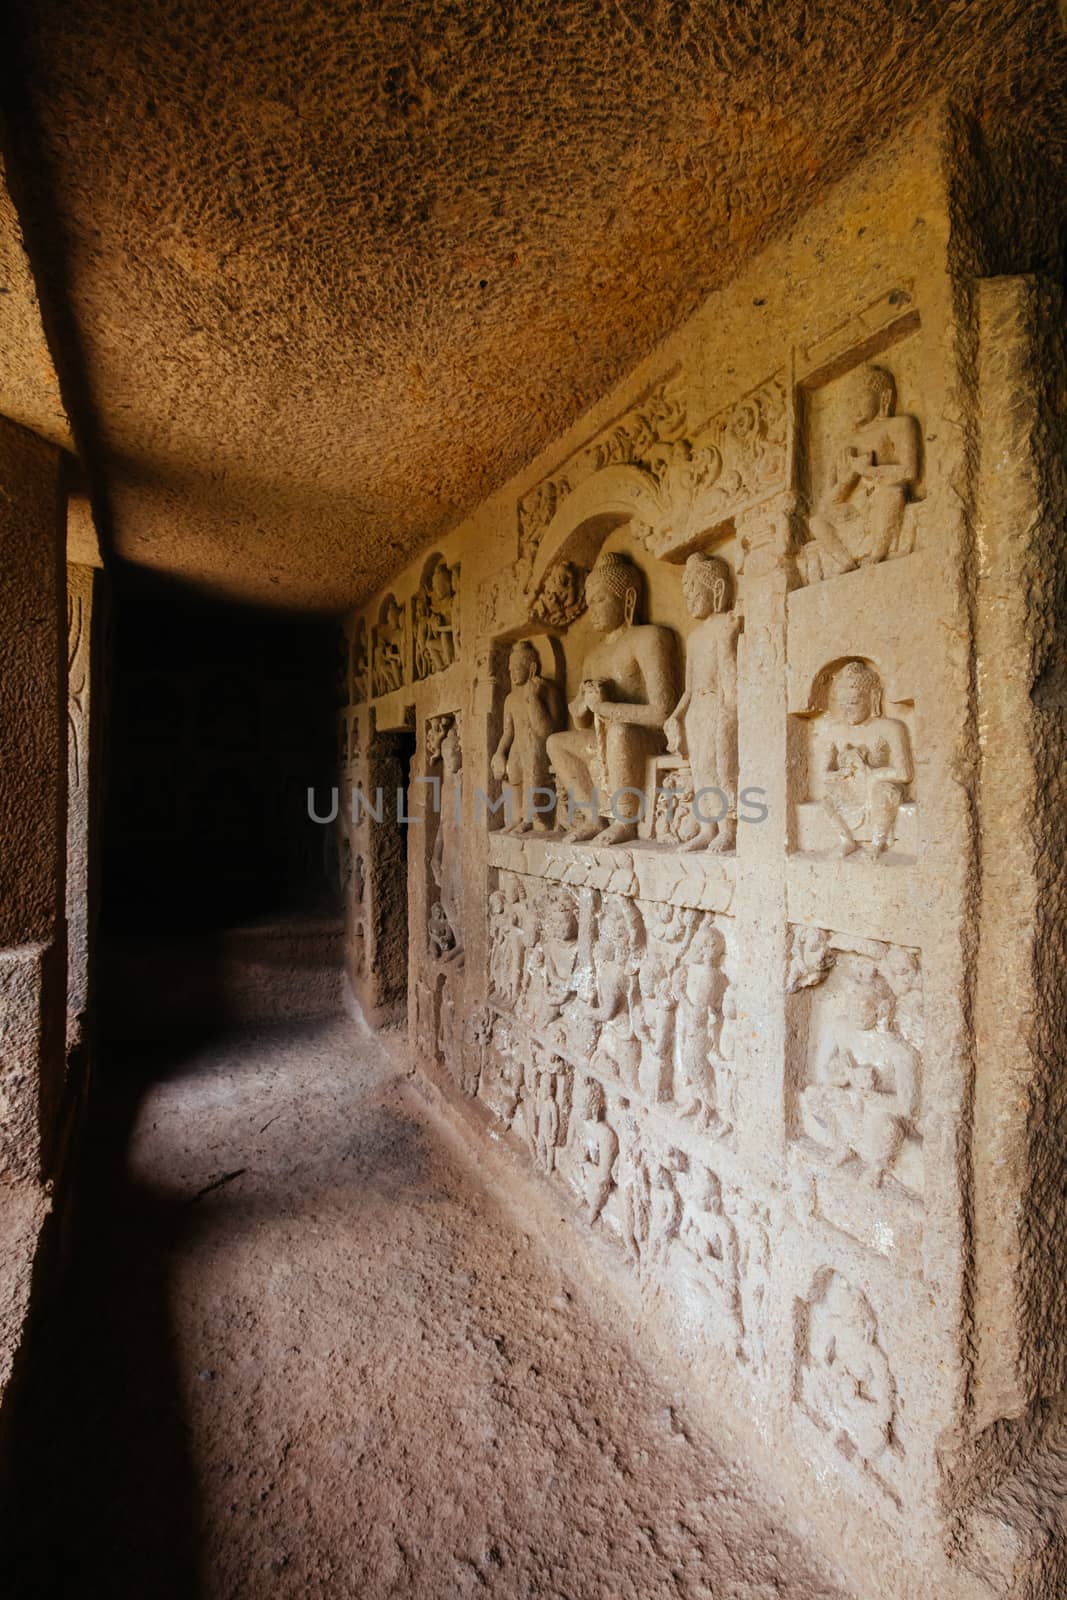 Kanheri Caves exist within Sanjay Gandhi National Park in northern Mumbai in India